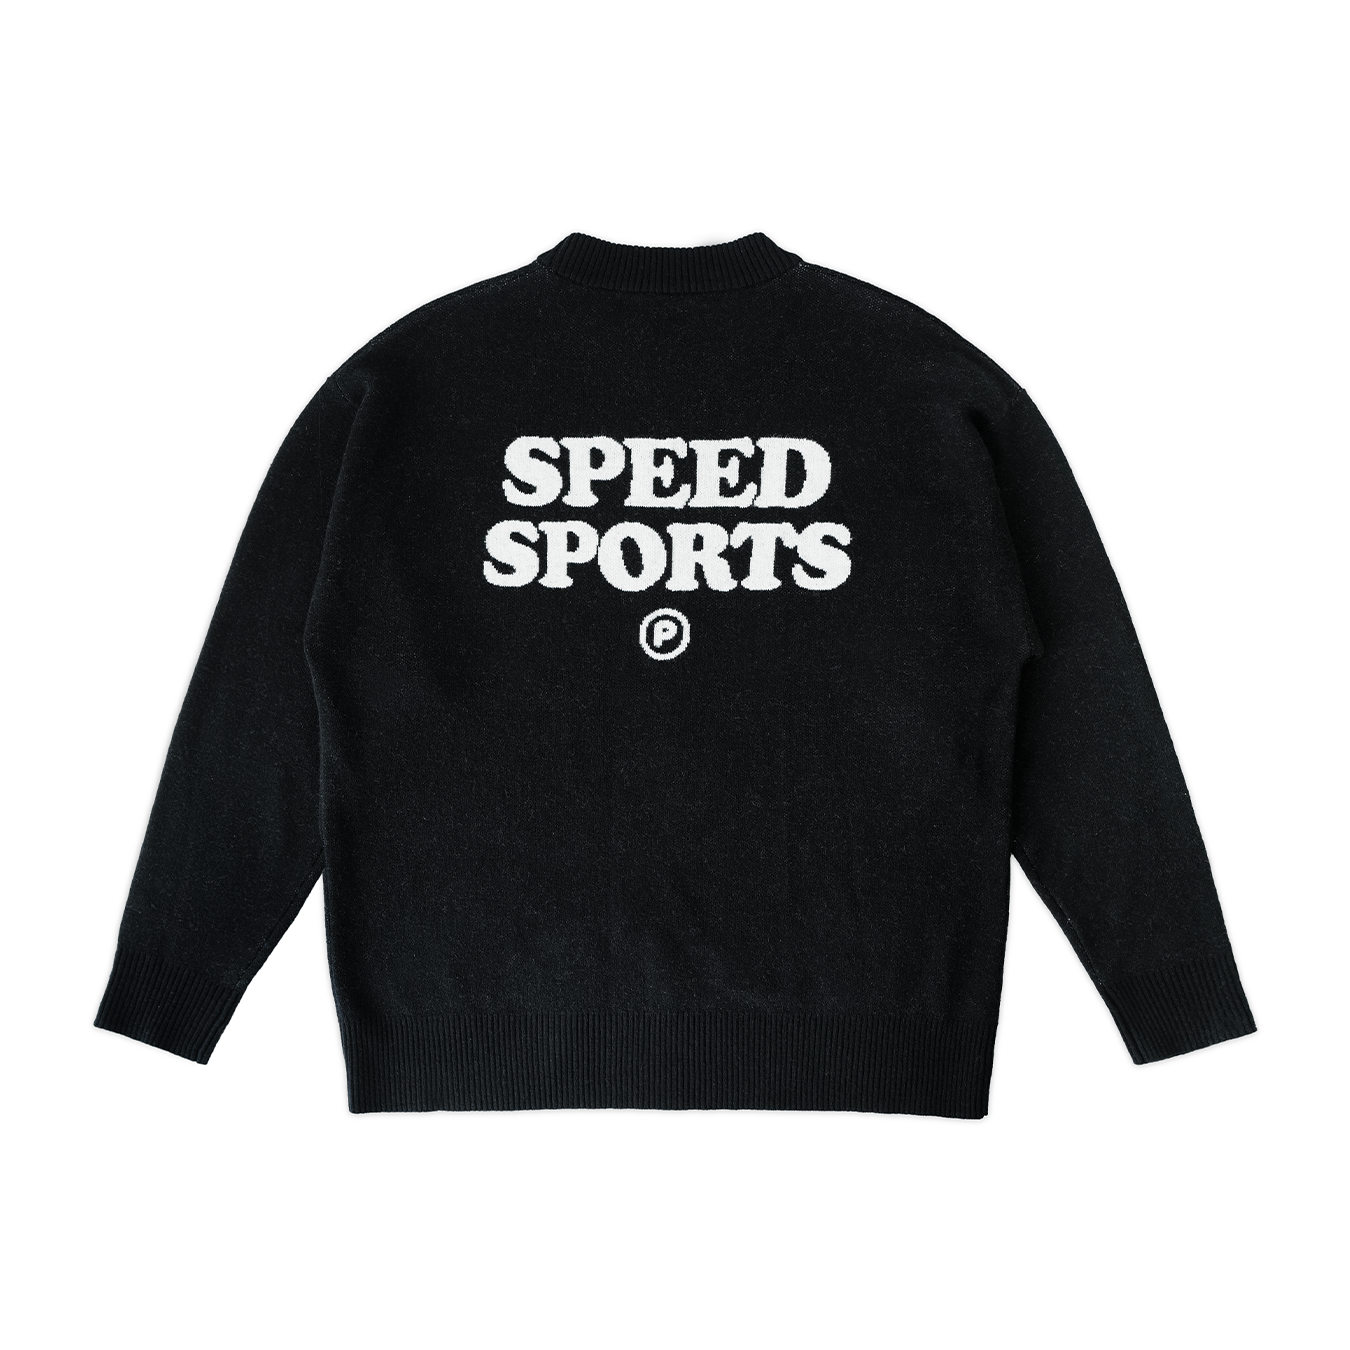 PAWA Speed Sports Doggo Knit Sweater